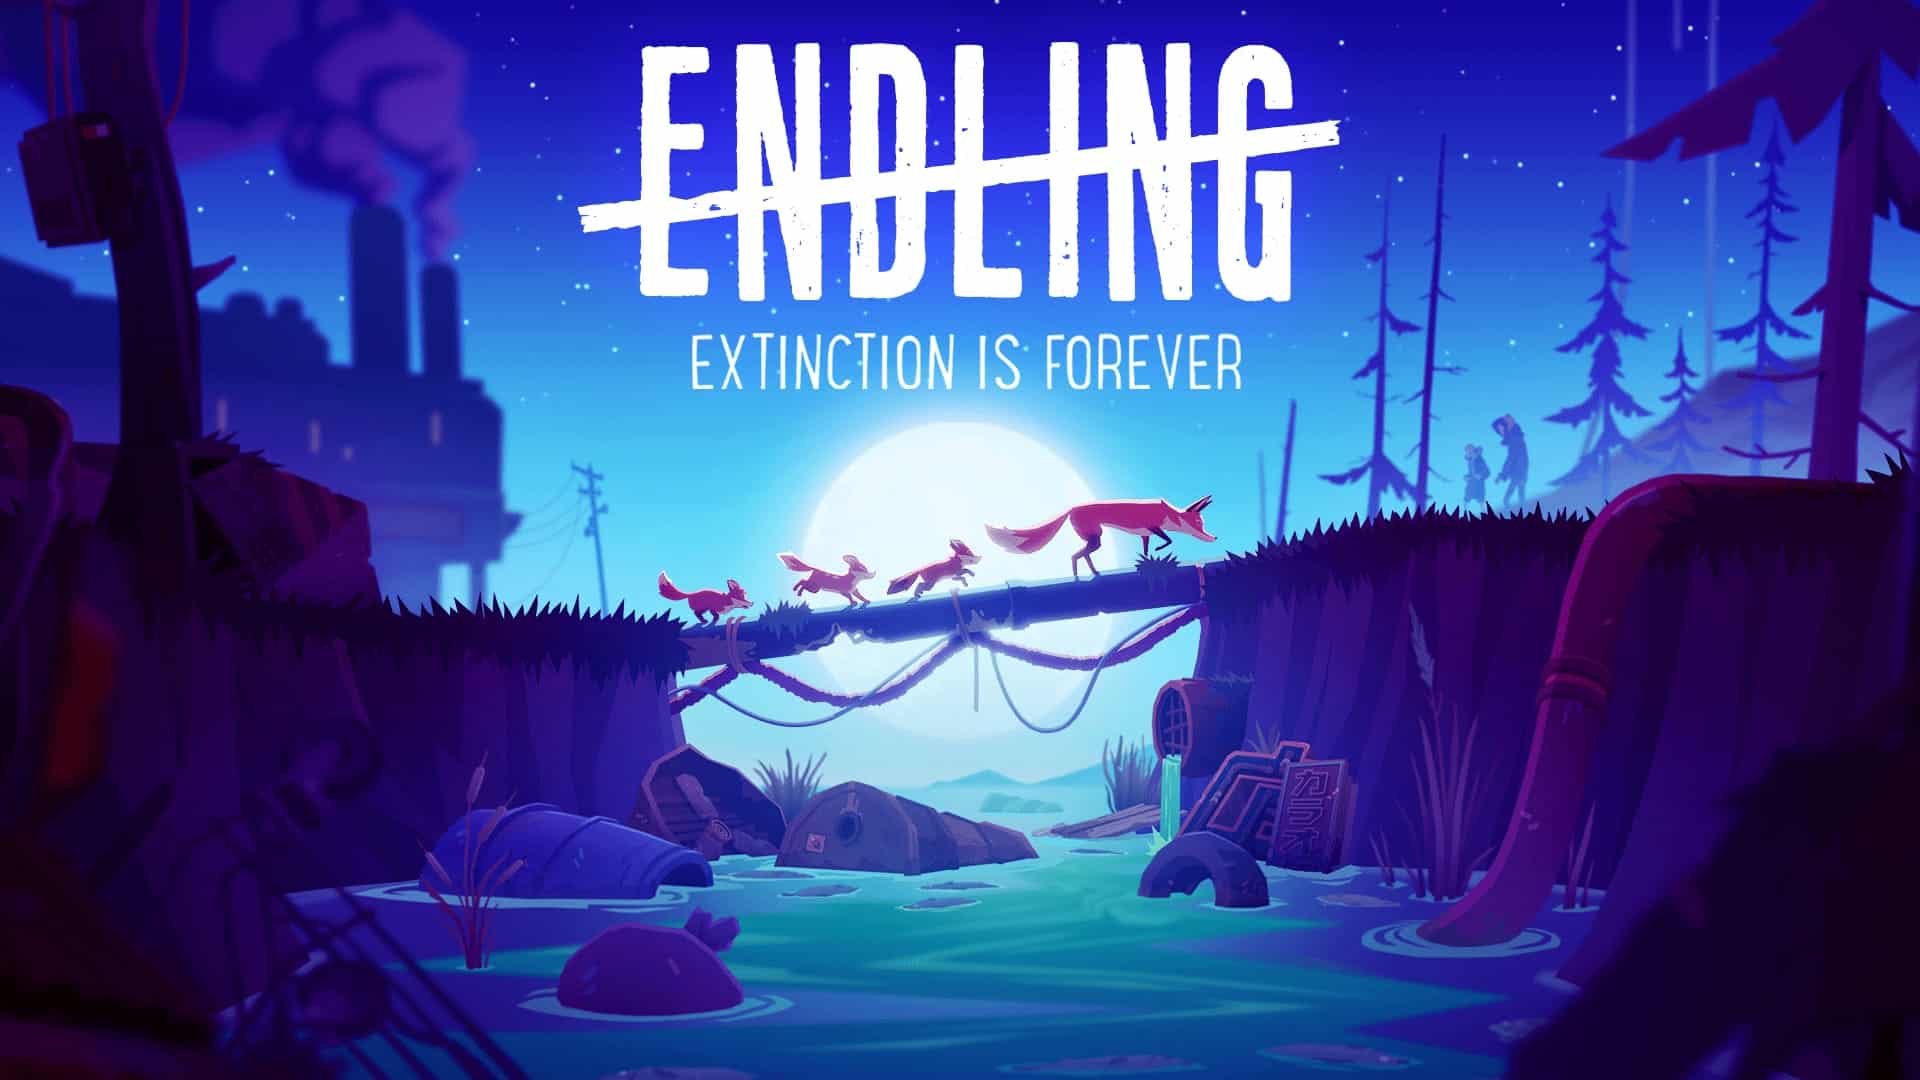 Endling- Extinction is Forever